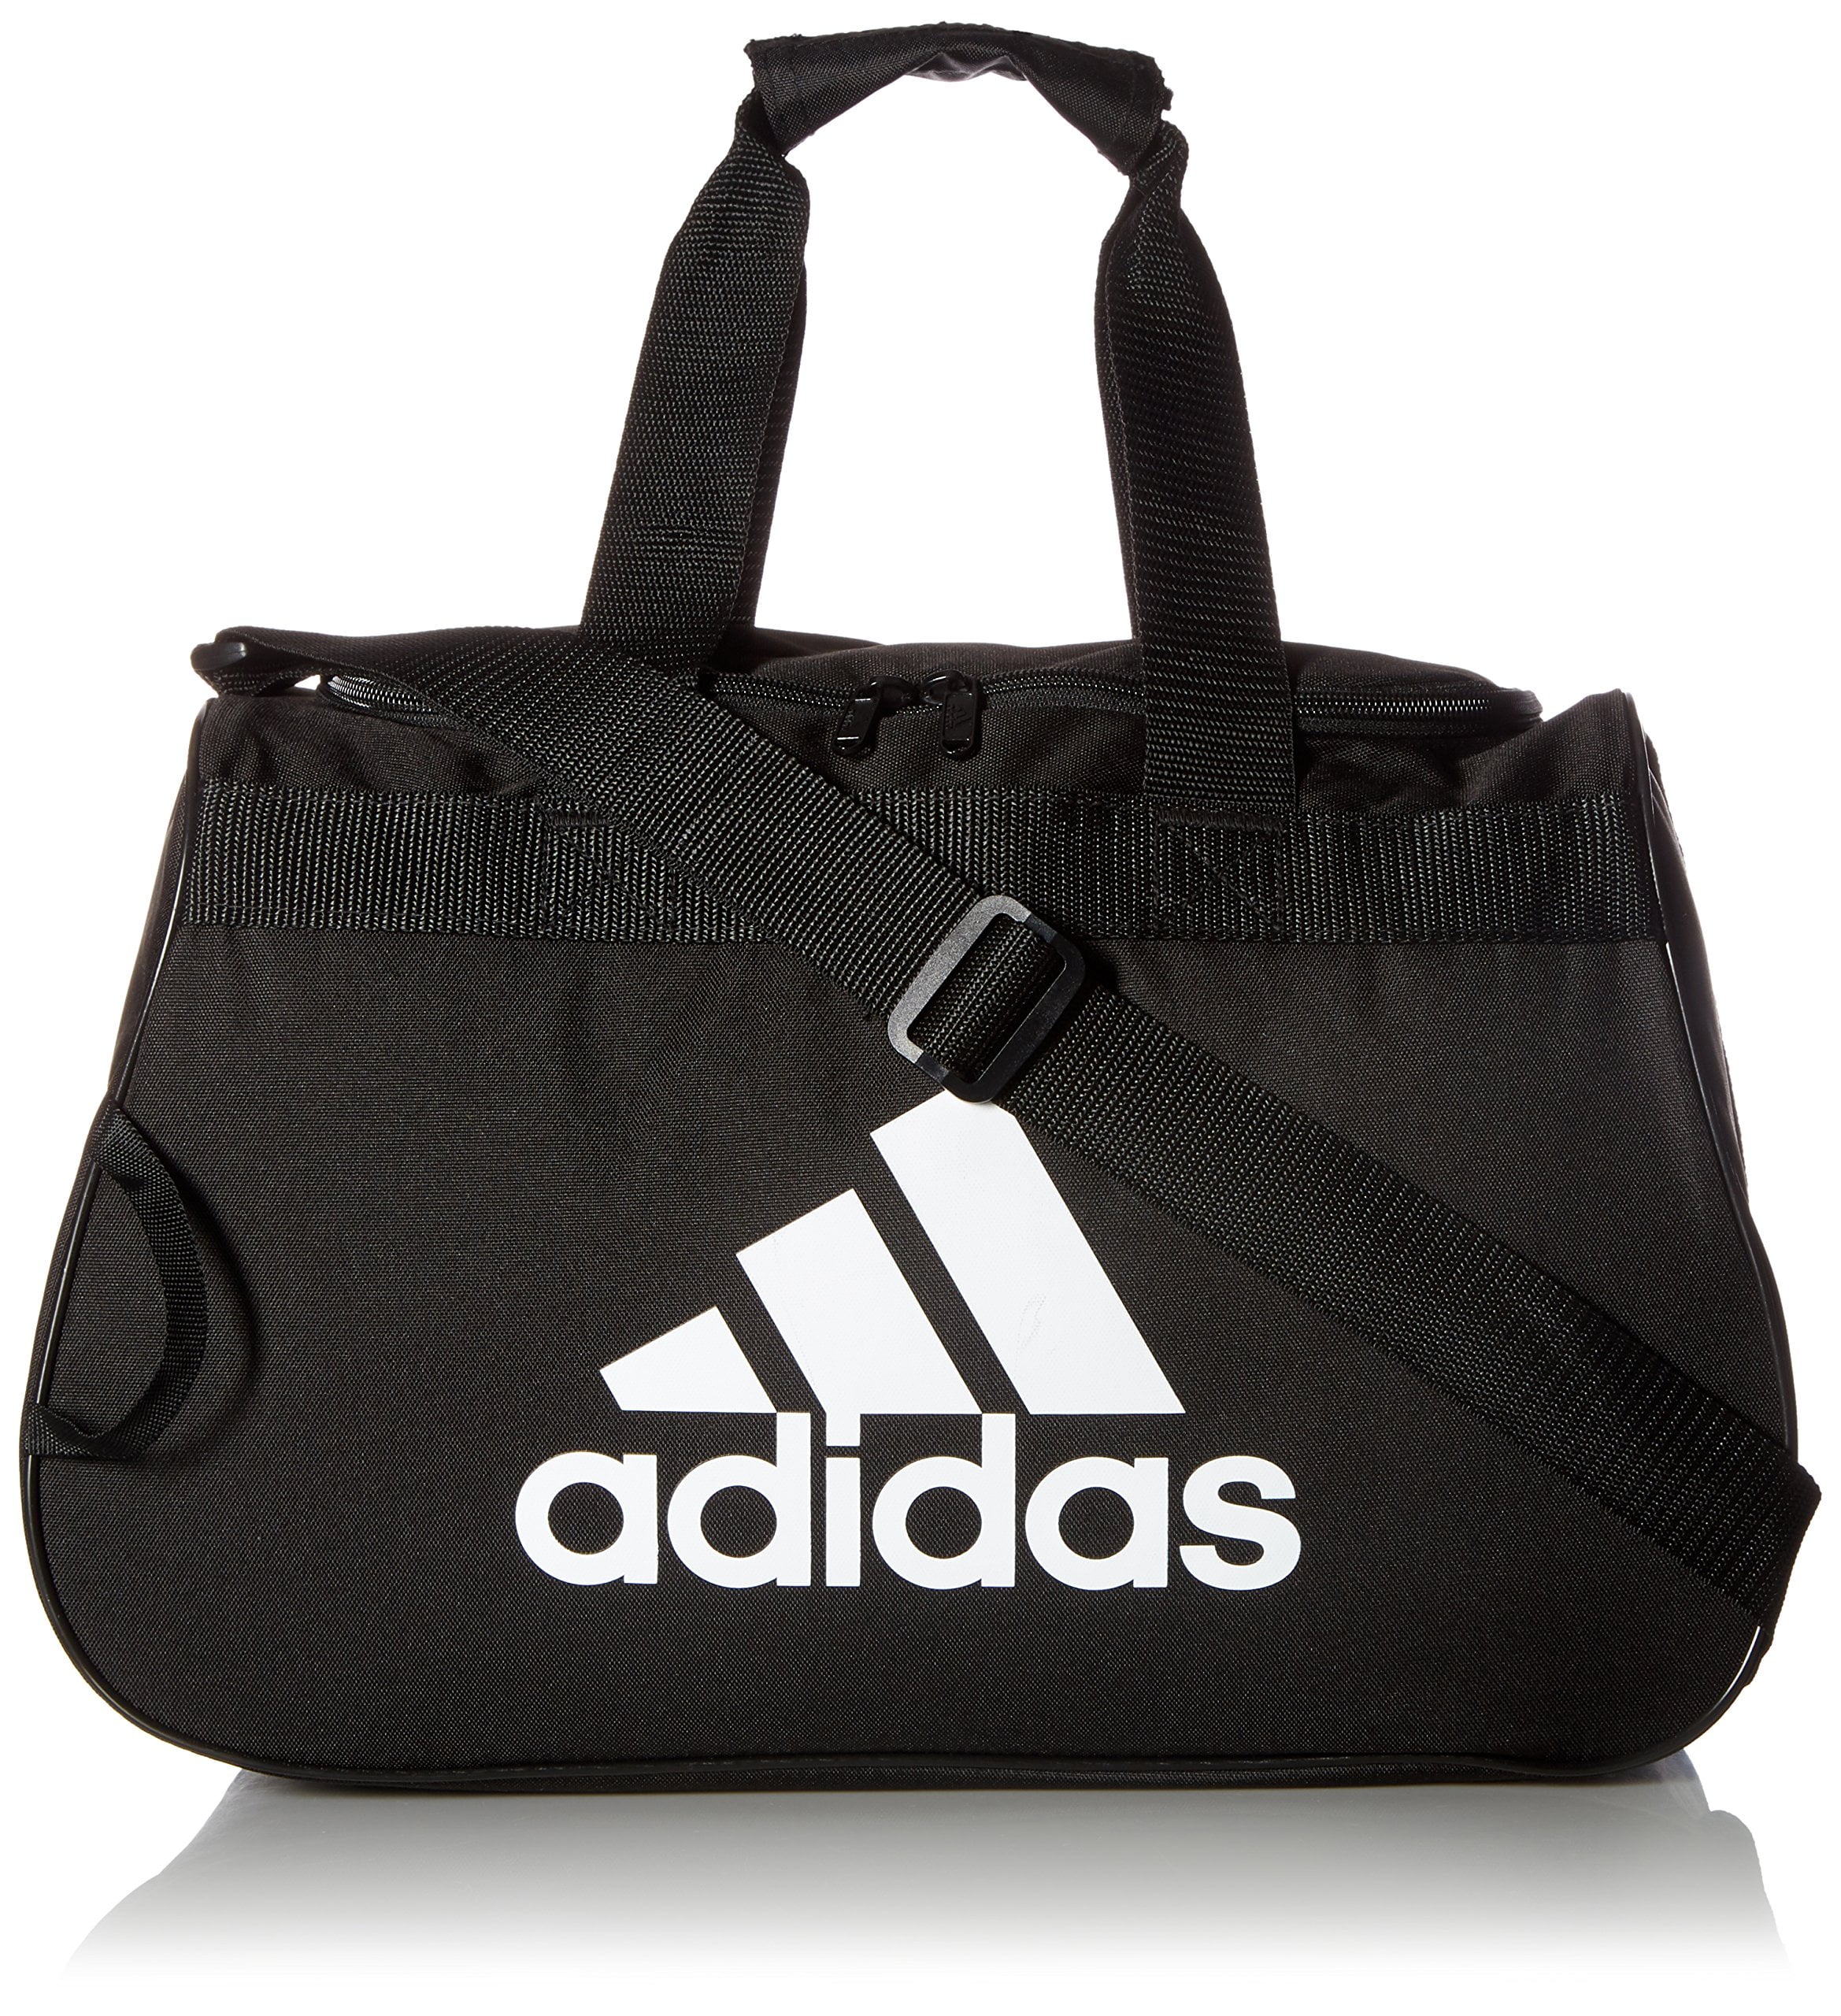 Adidas Diablo Small Sport Duffle Duffel Carry Overnight Bag (Black) - Walmart.com